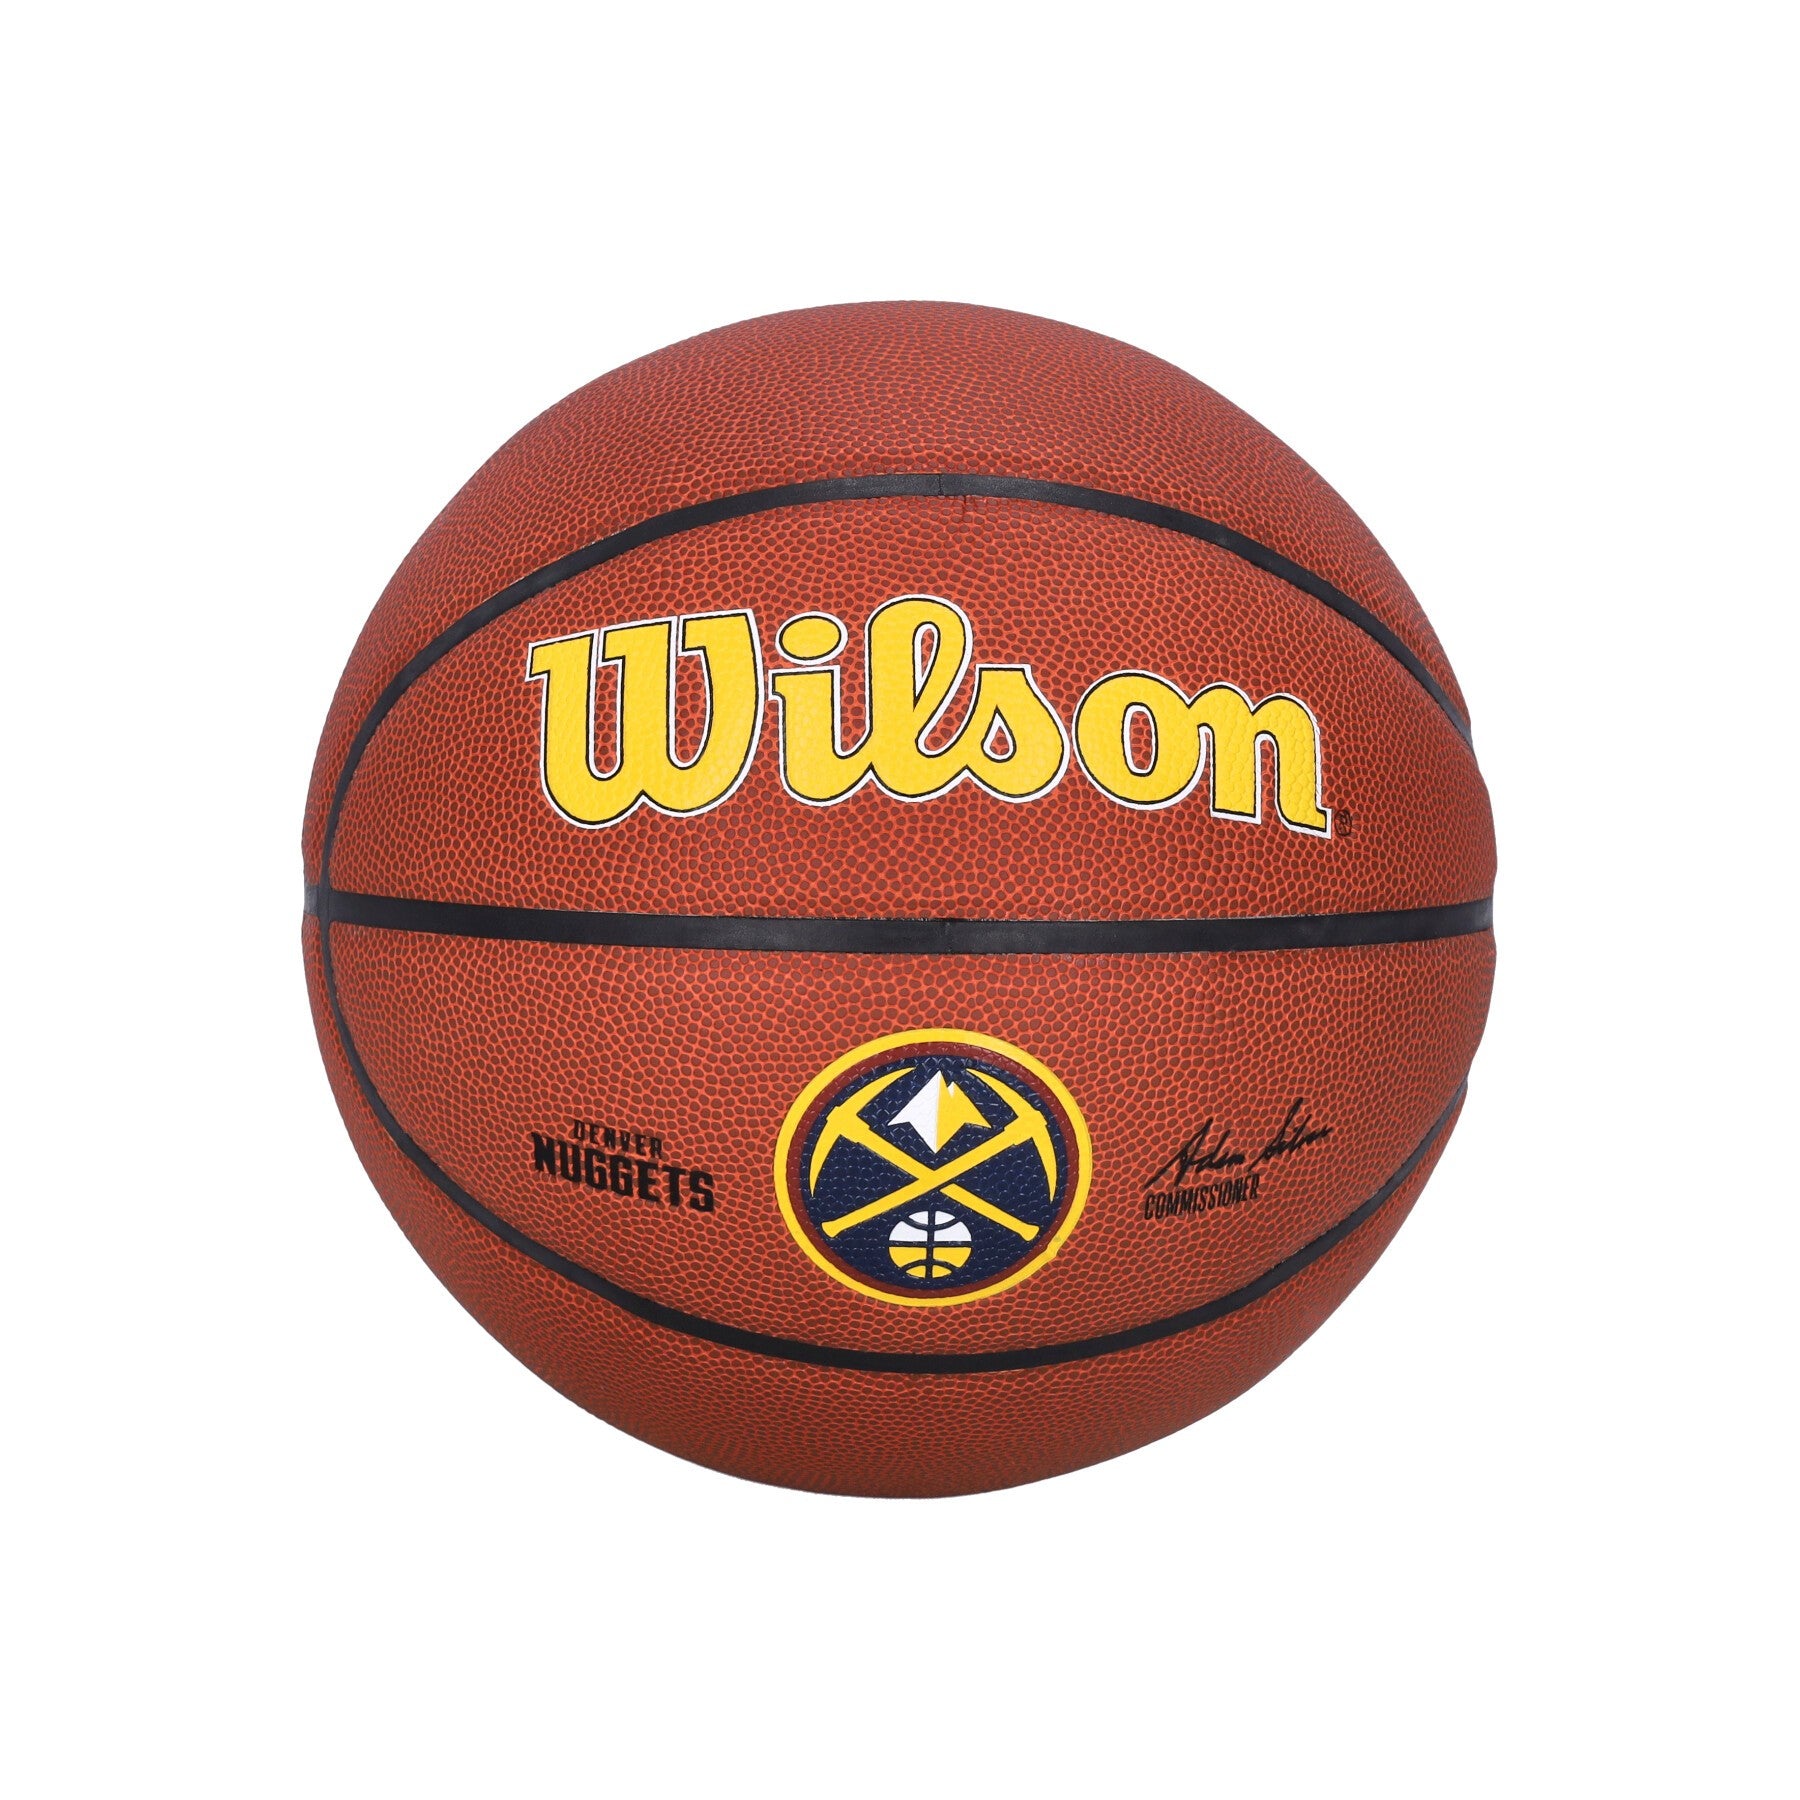 Pallone Uomo Nba Team Alliance Basketball Size 7 Dennug Brown/original Team Colors WTB3100XBDEN